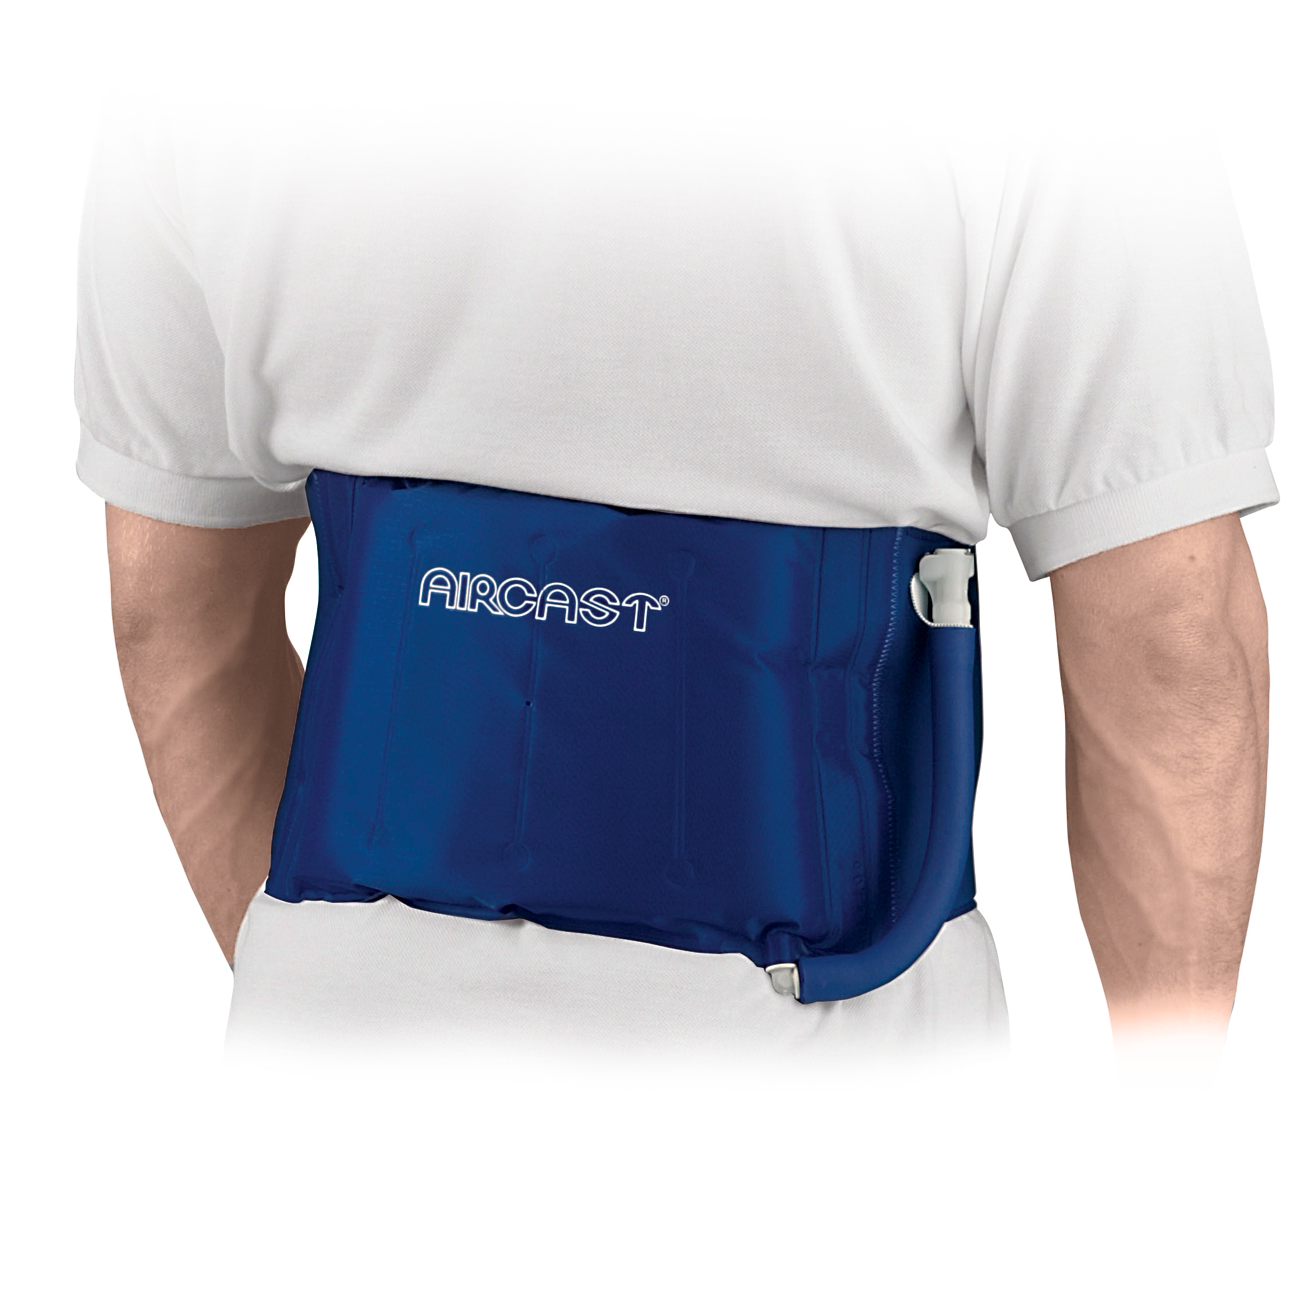 AIRCAST_Cryo-Cuff-Rückenbandage_Produktbild.png